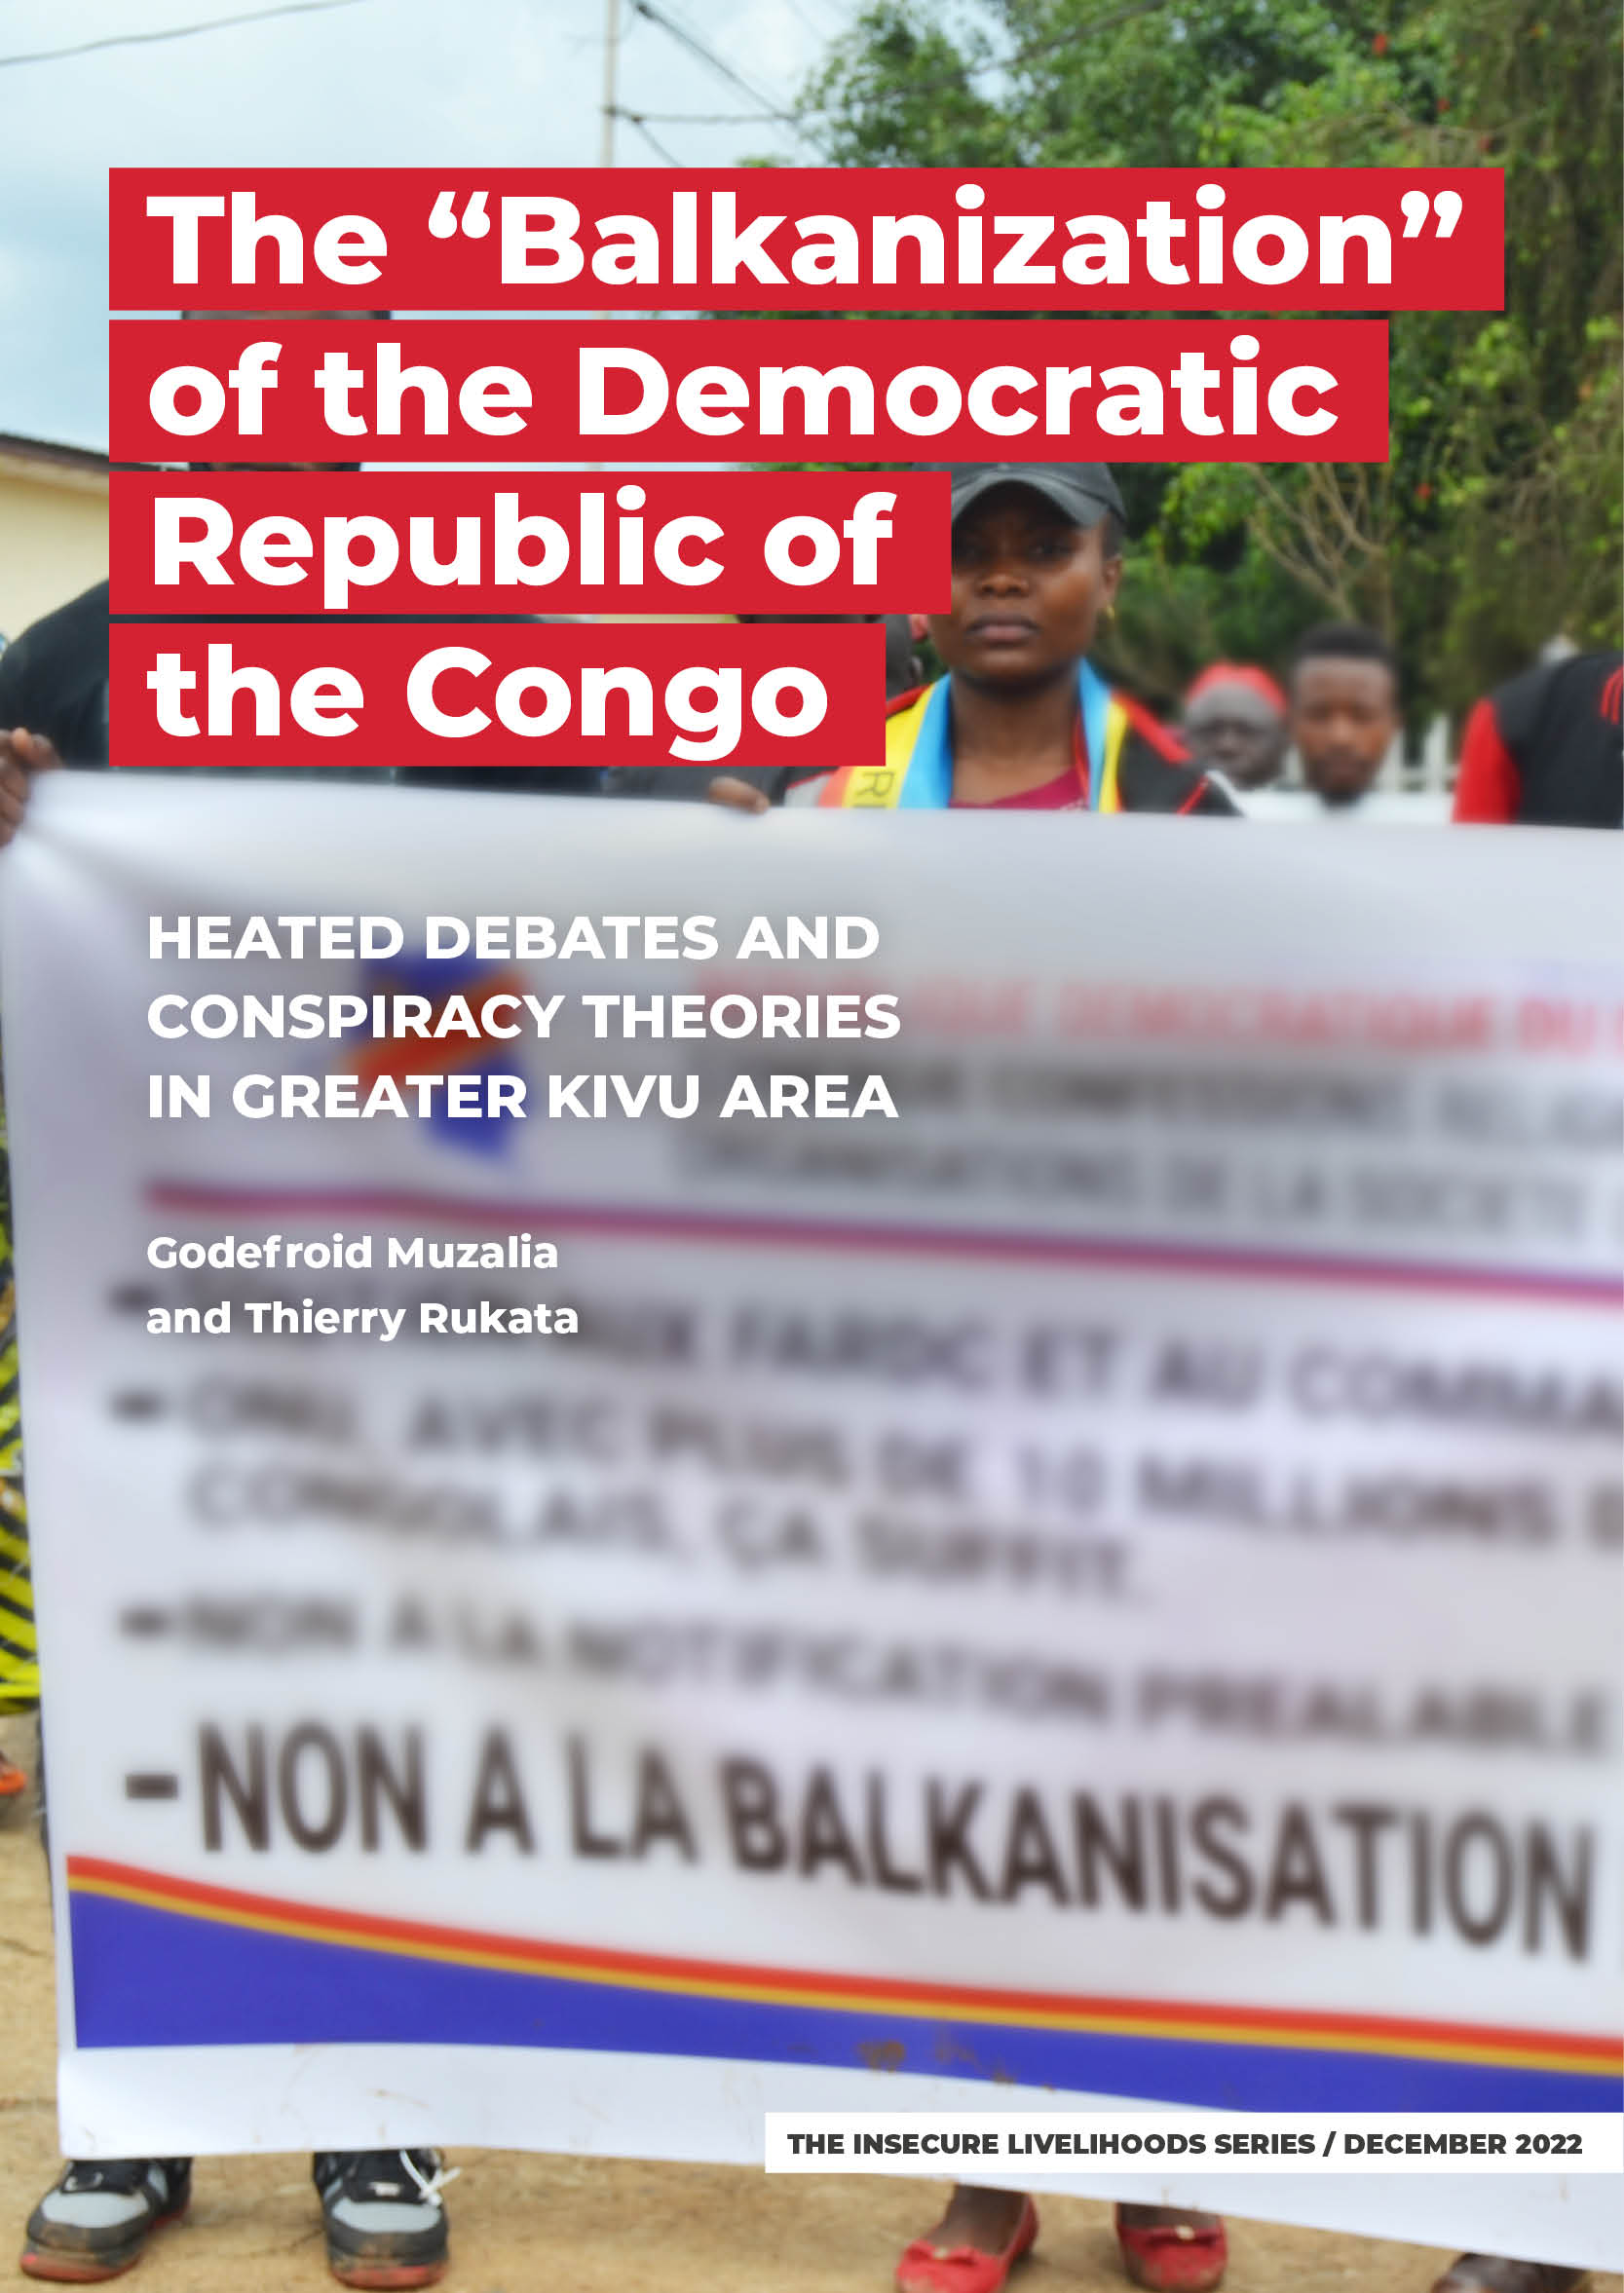 16_GIC_The “Balkanization” of the Democratic Republic of the Congo_BANNERS_4